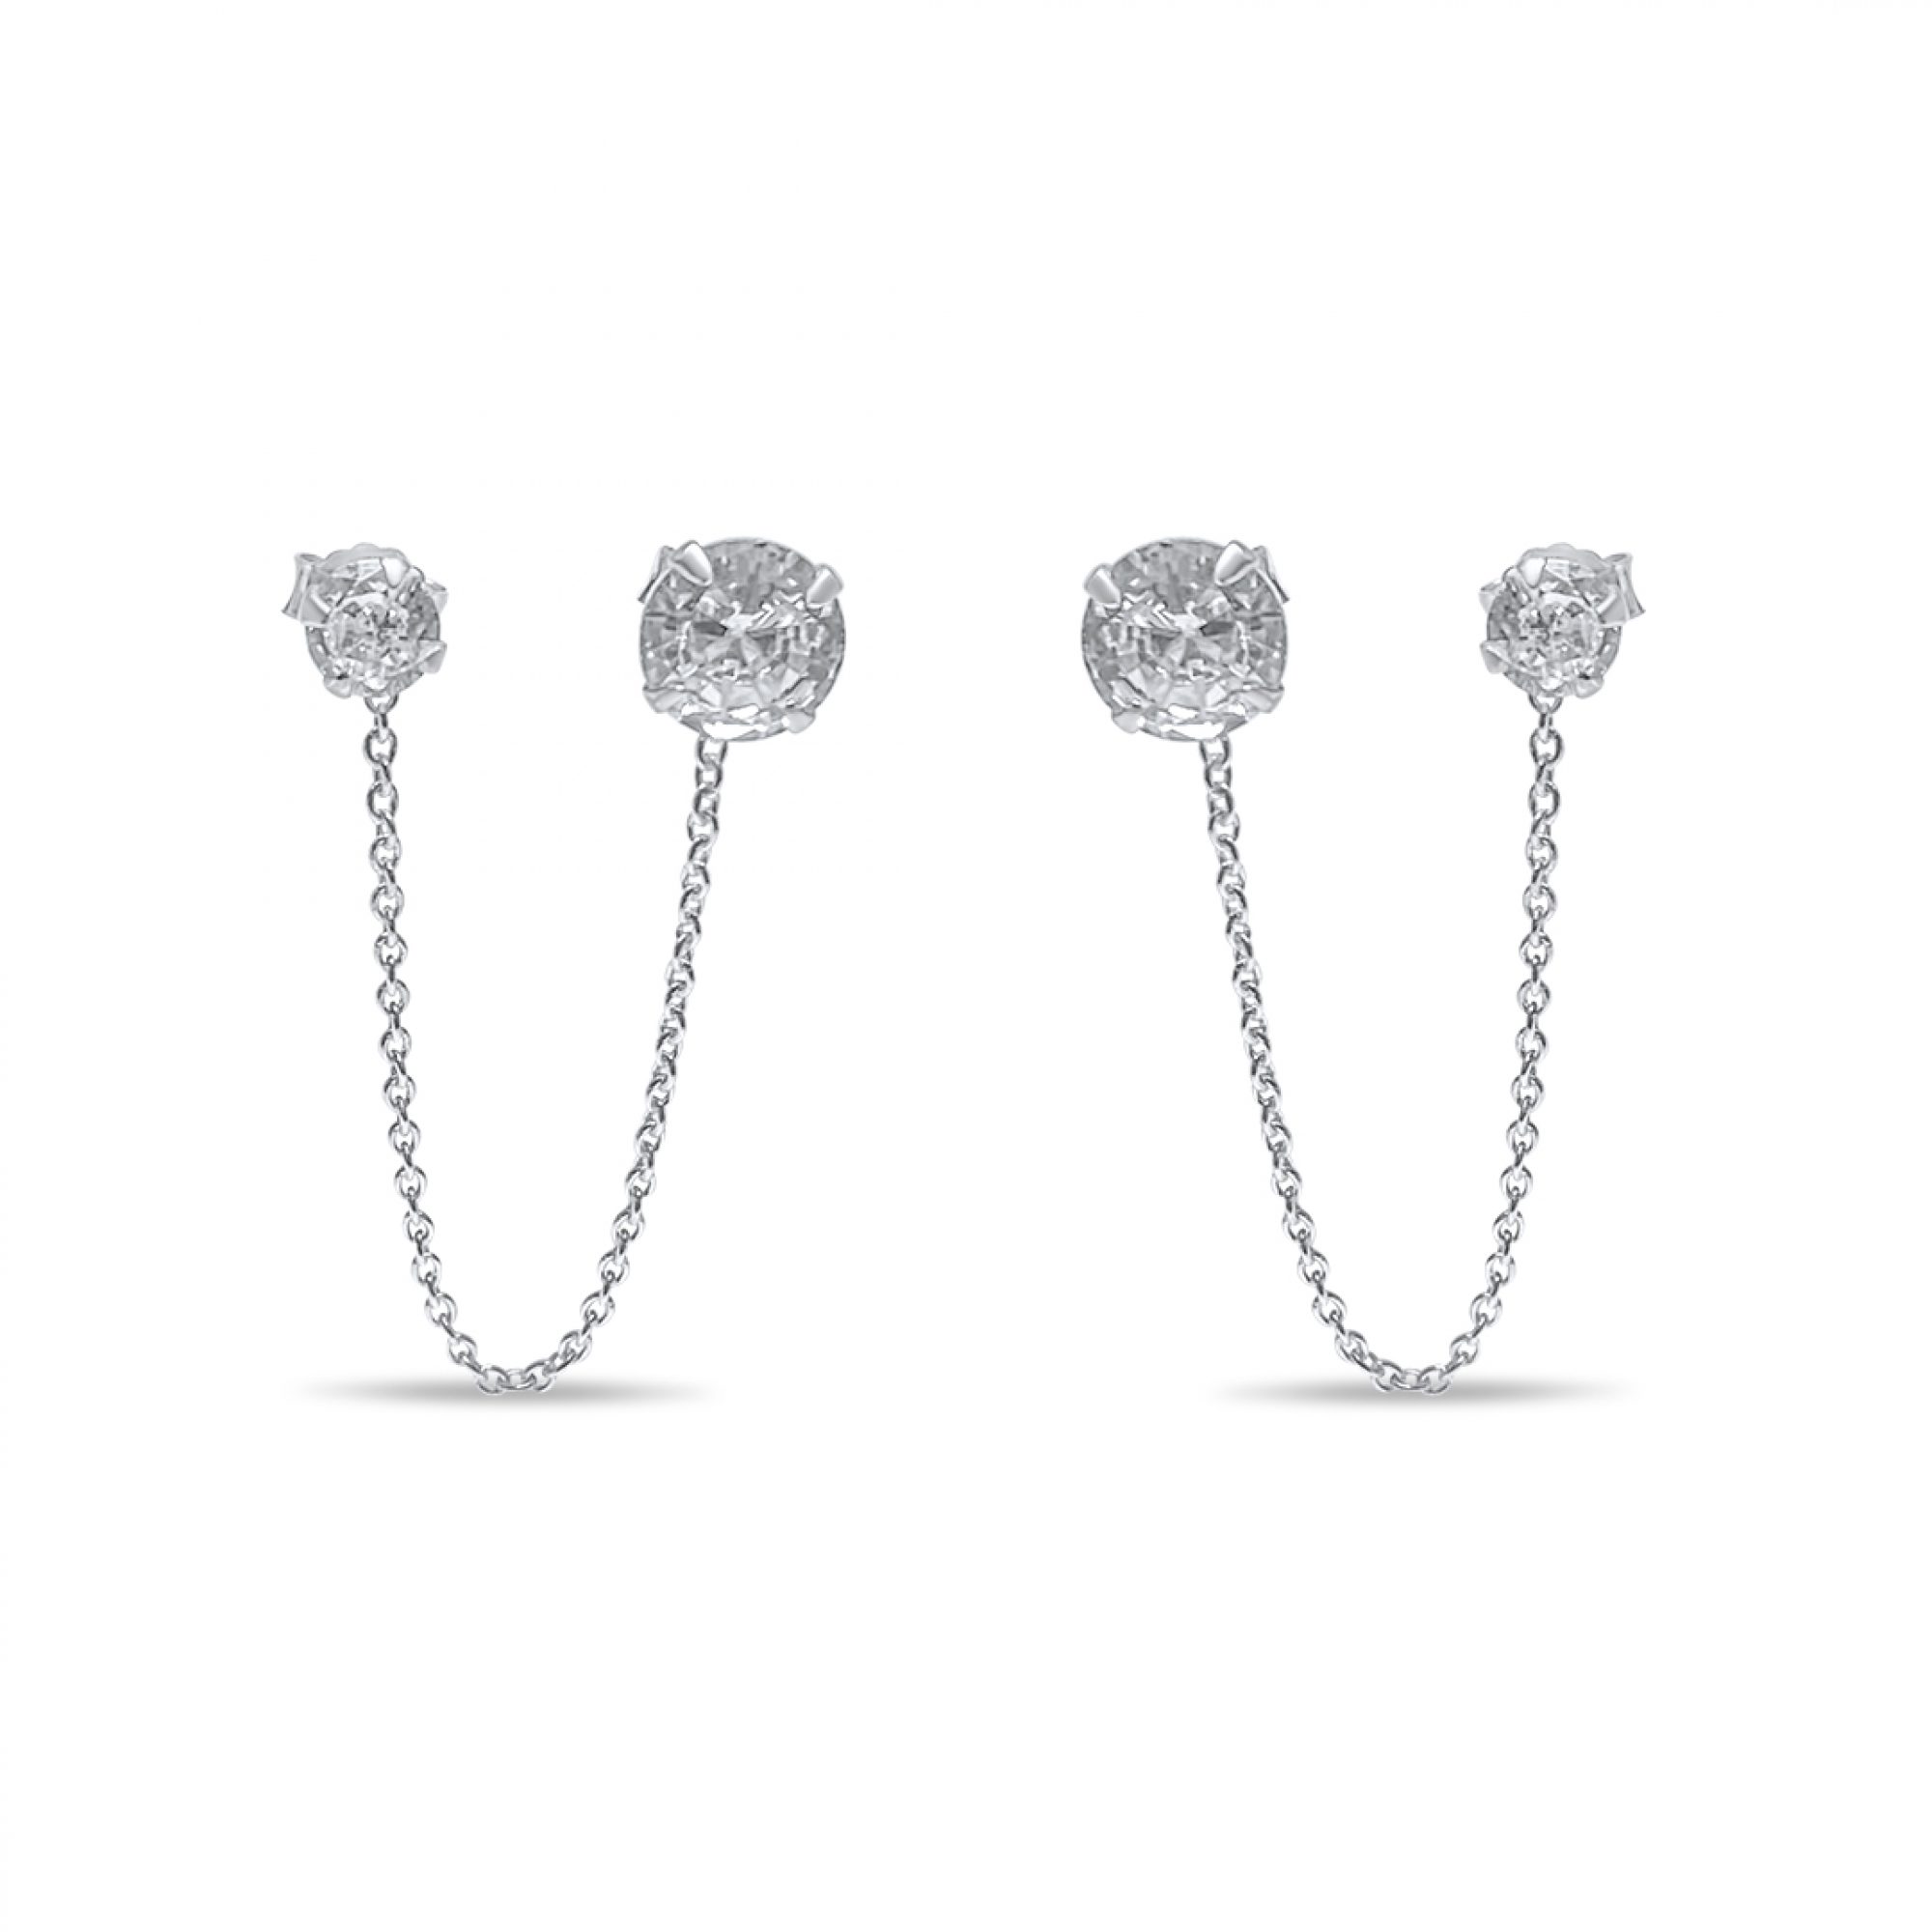 Chain earrings with zircon stones